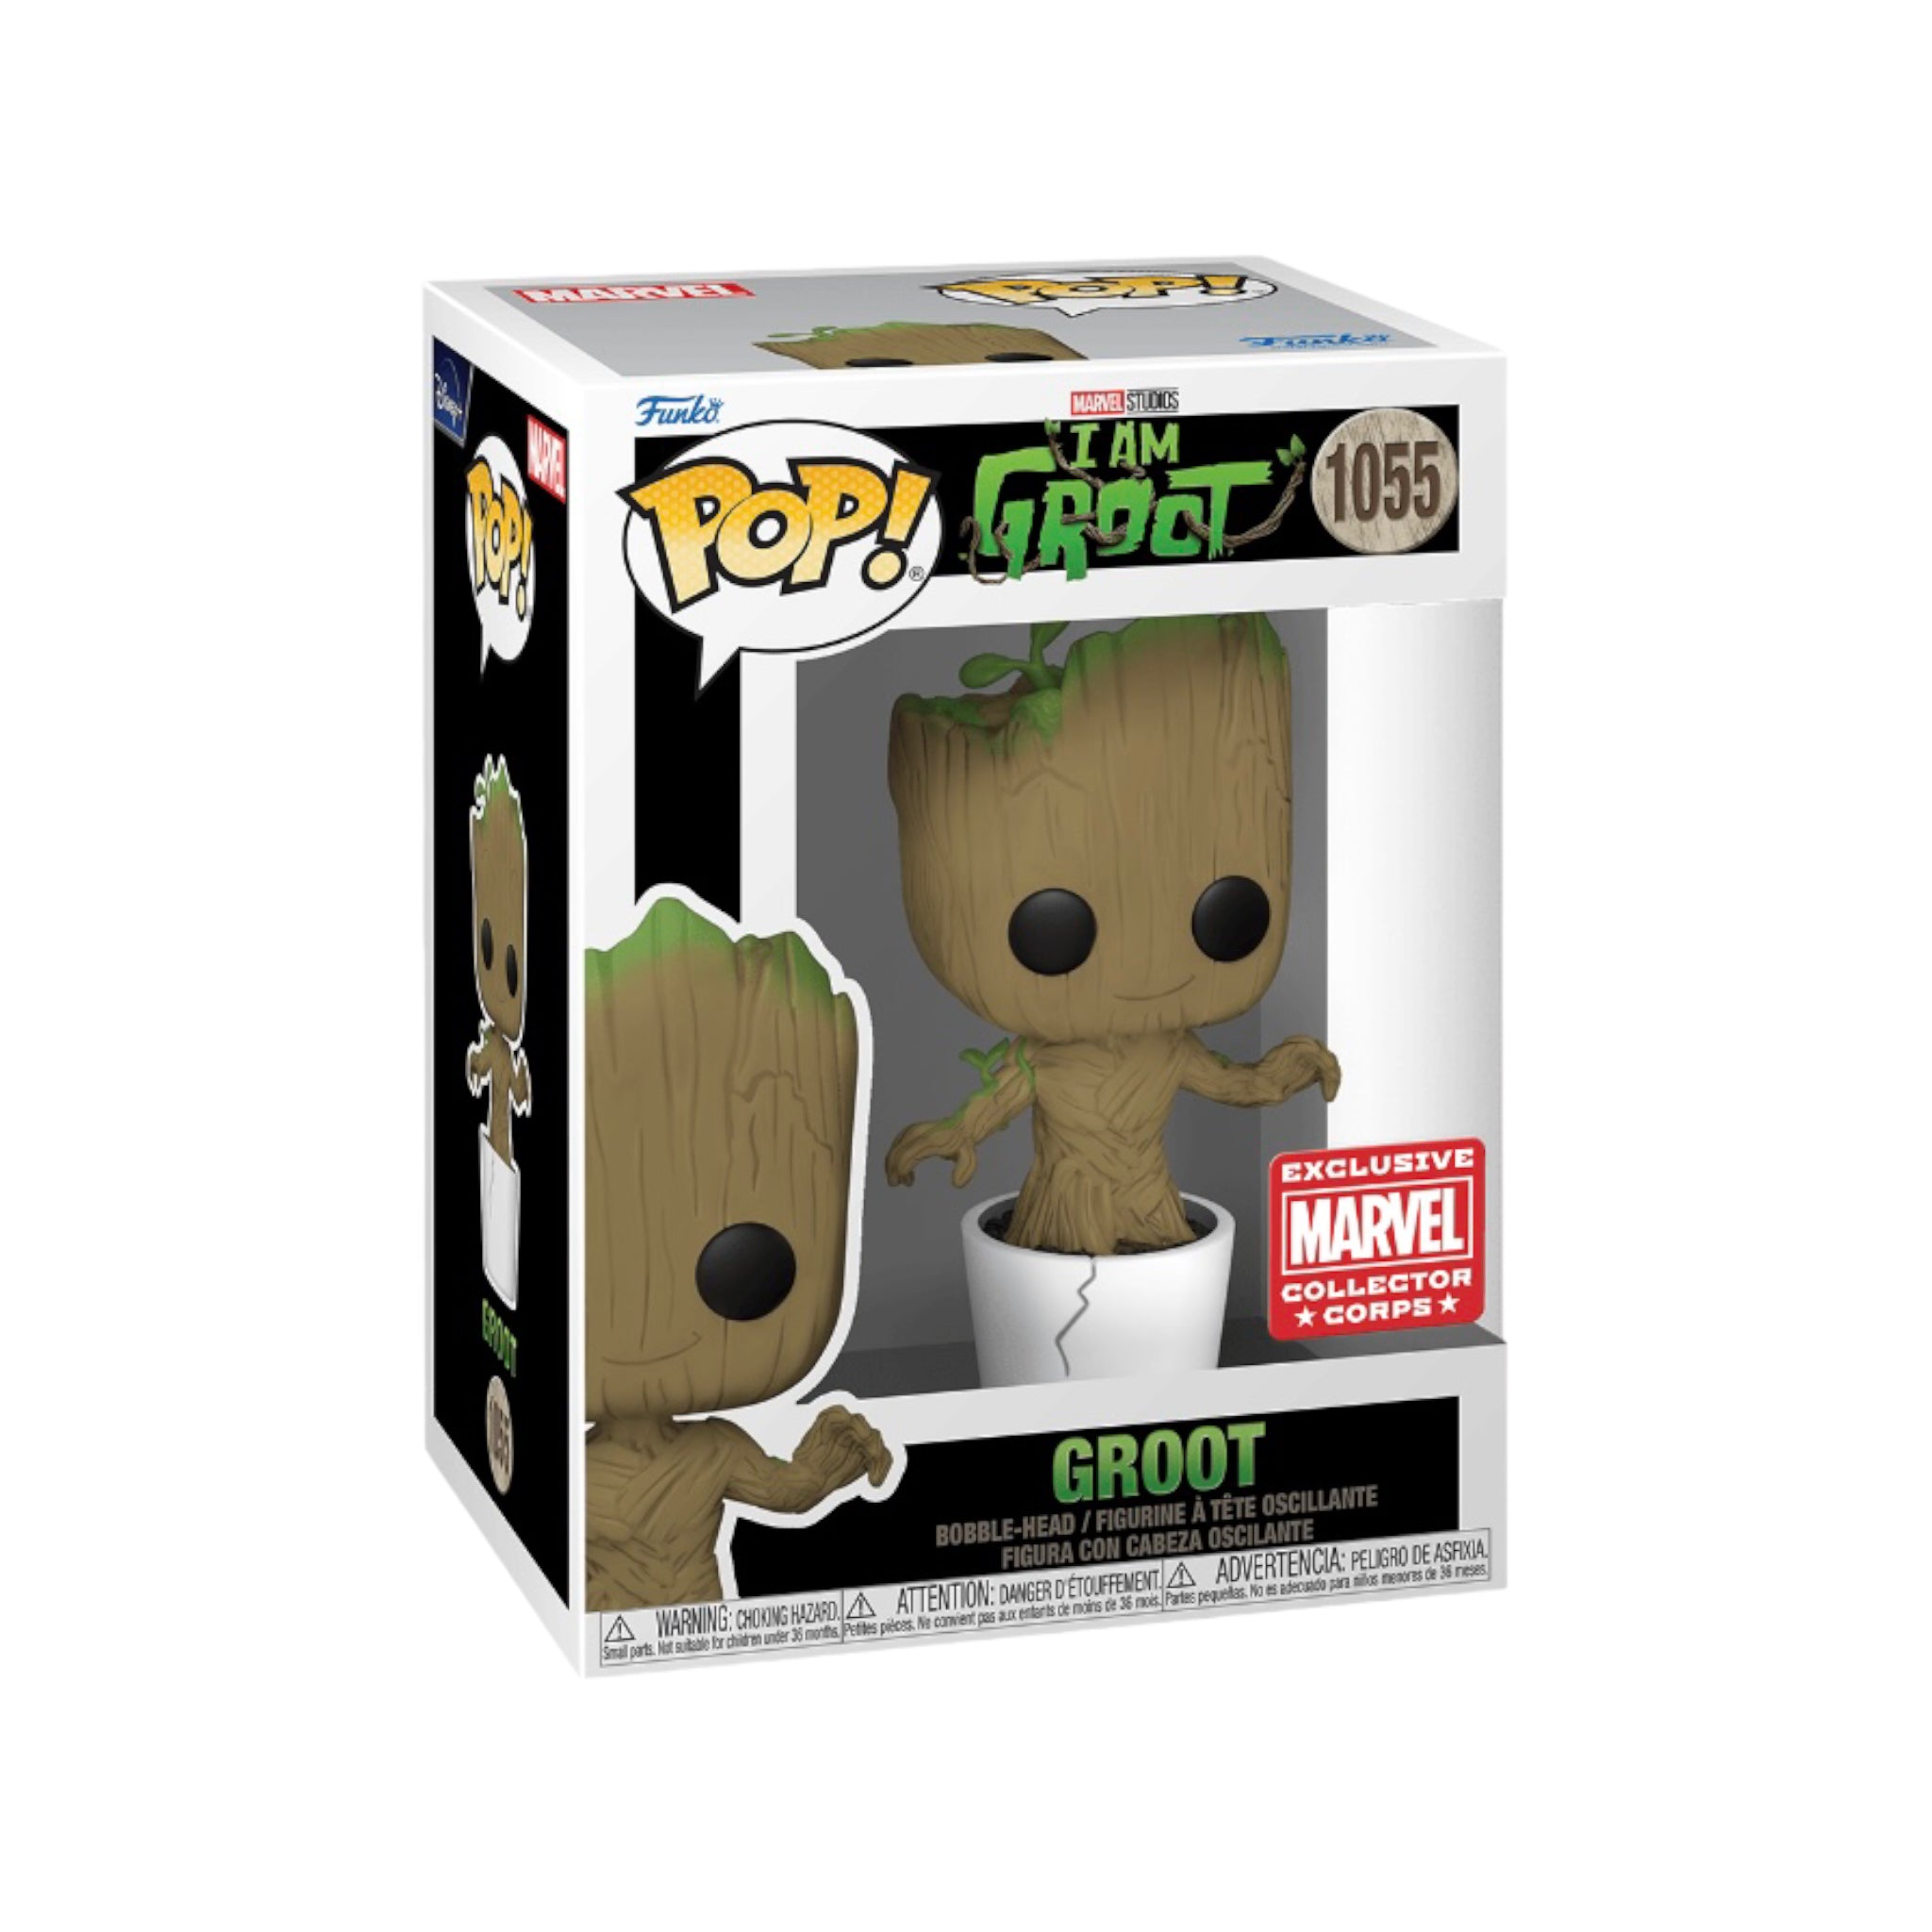 Groot #1055 Funko Pop! - I Am Groot - Marvel Collector Corps Exclusive